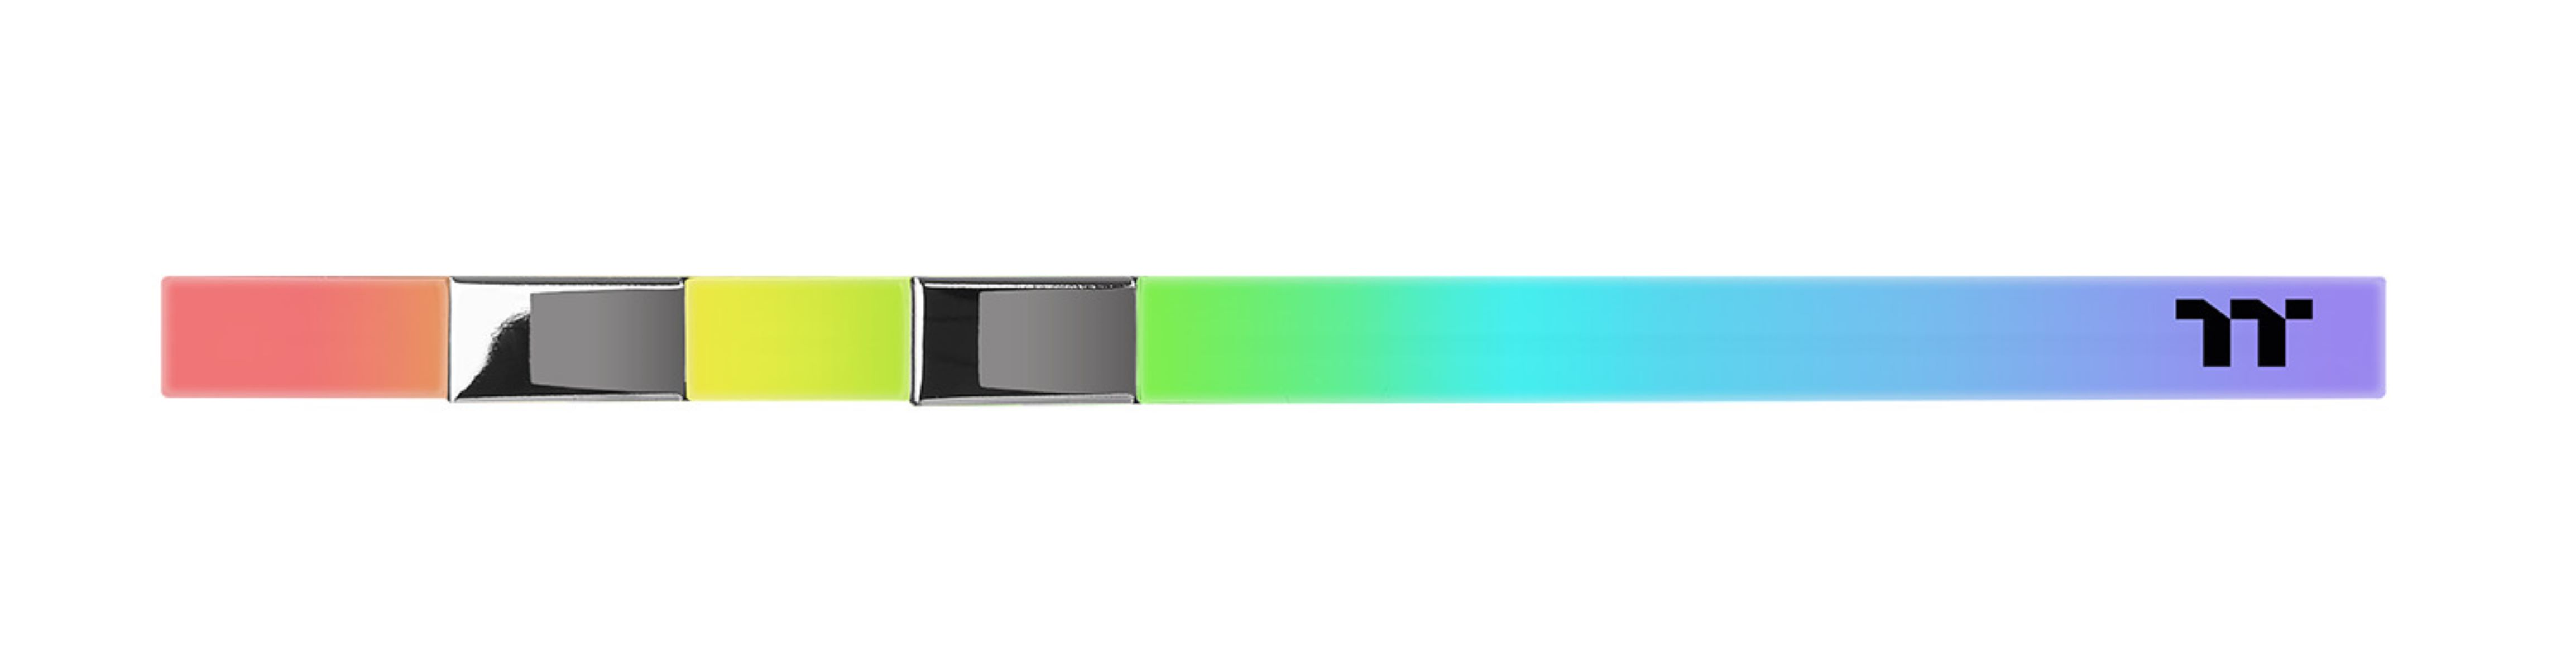 16 Arbeitsspeicher THERMALTAKE RGB GB Turquoise TOUGHRAM DDR4